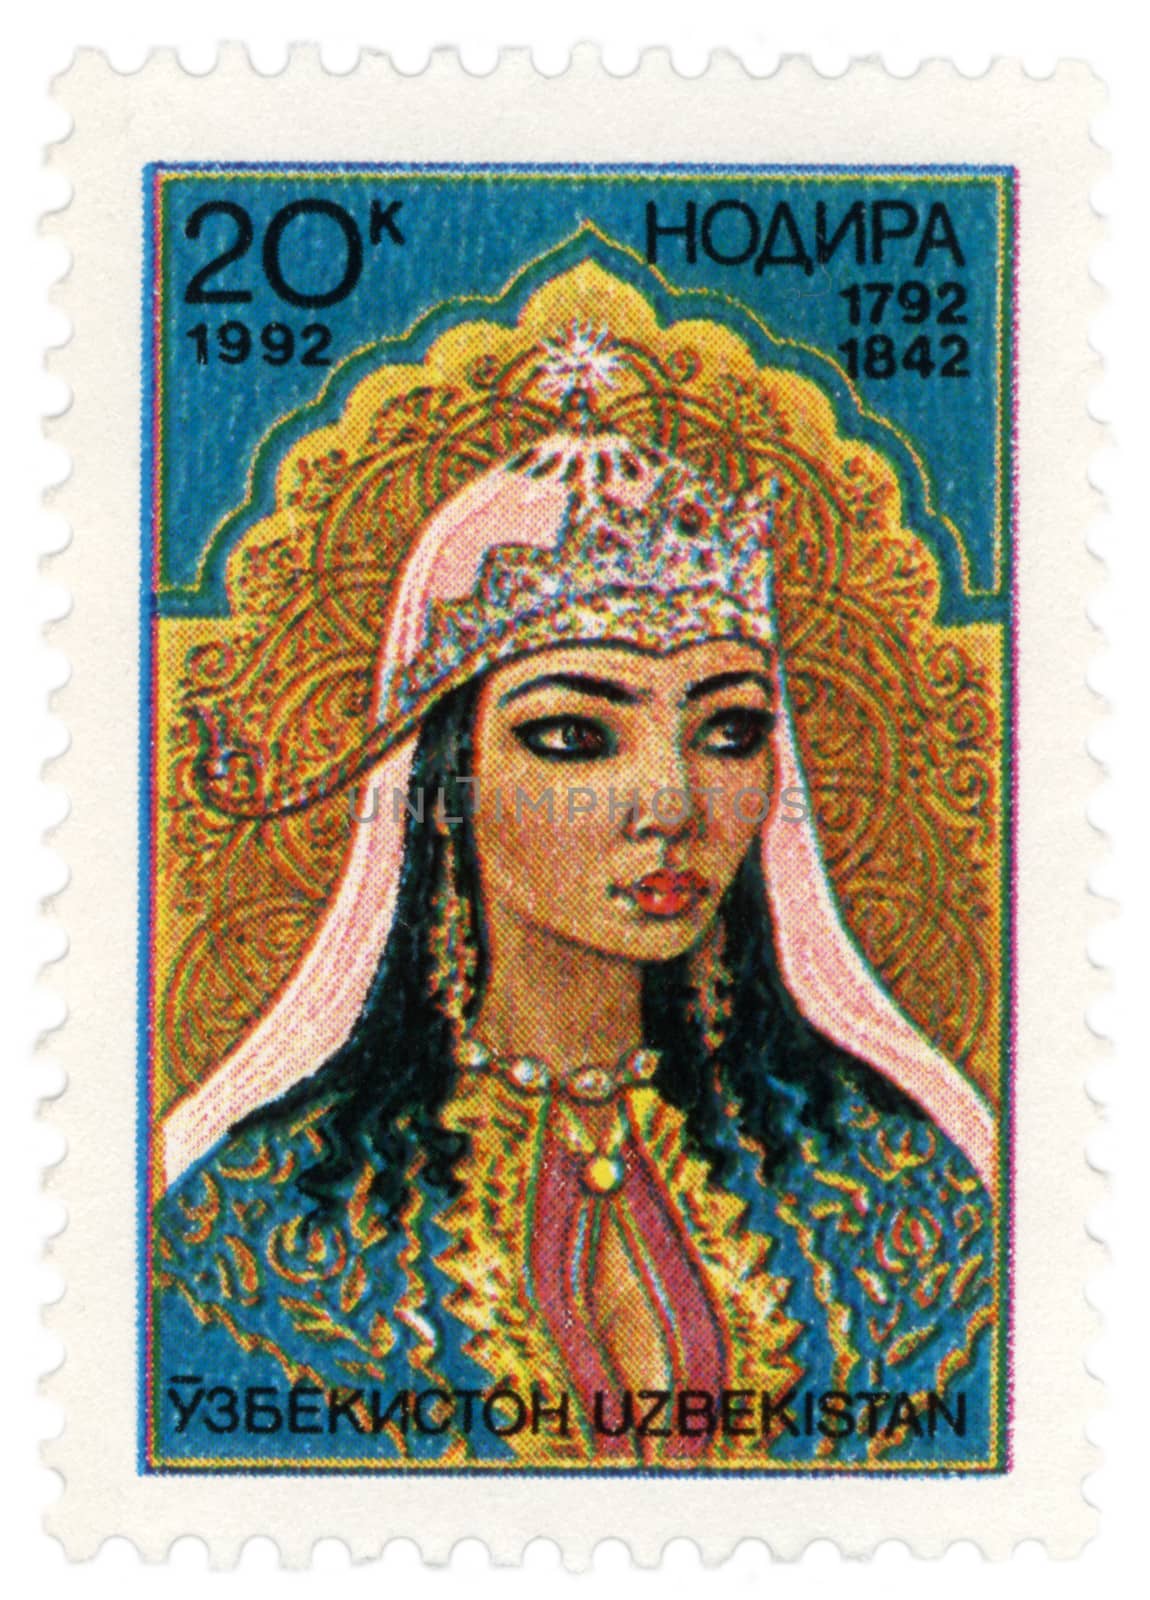 Uzbekistan - CIRCA 1992: post stamp printed in Uzbekistan shows portrait of Uzbek poetess Nadira (1792-1842), circa 1992